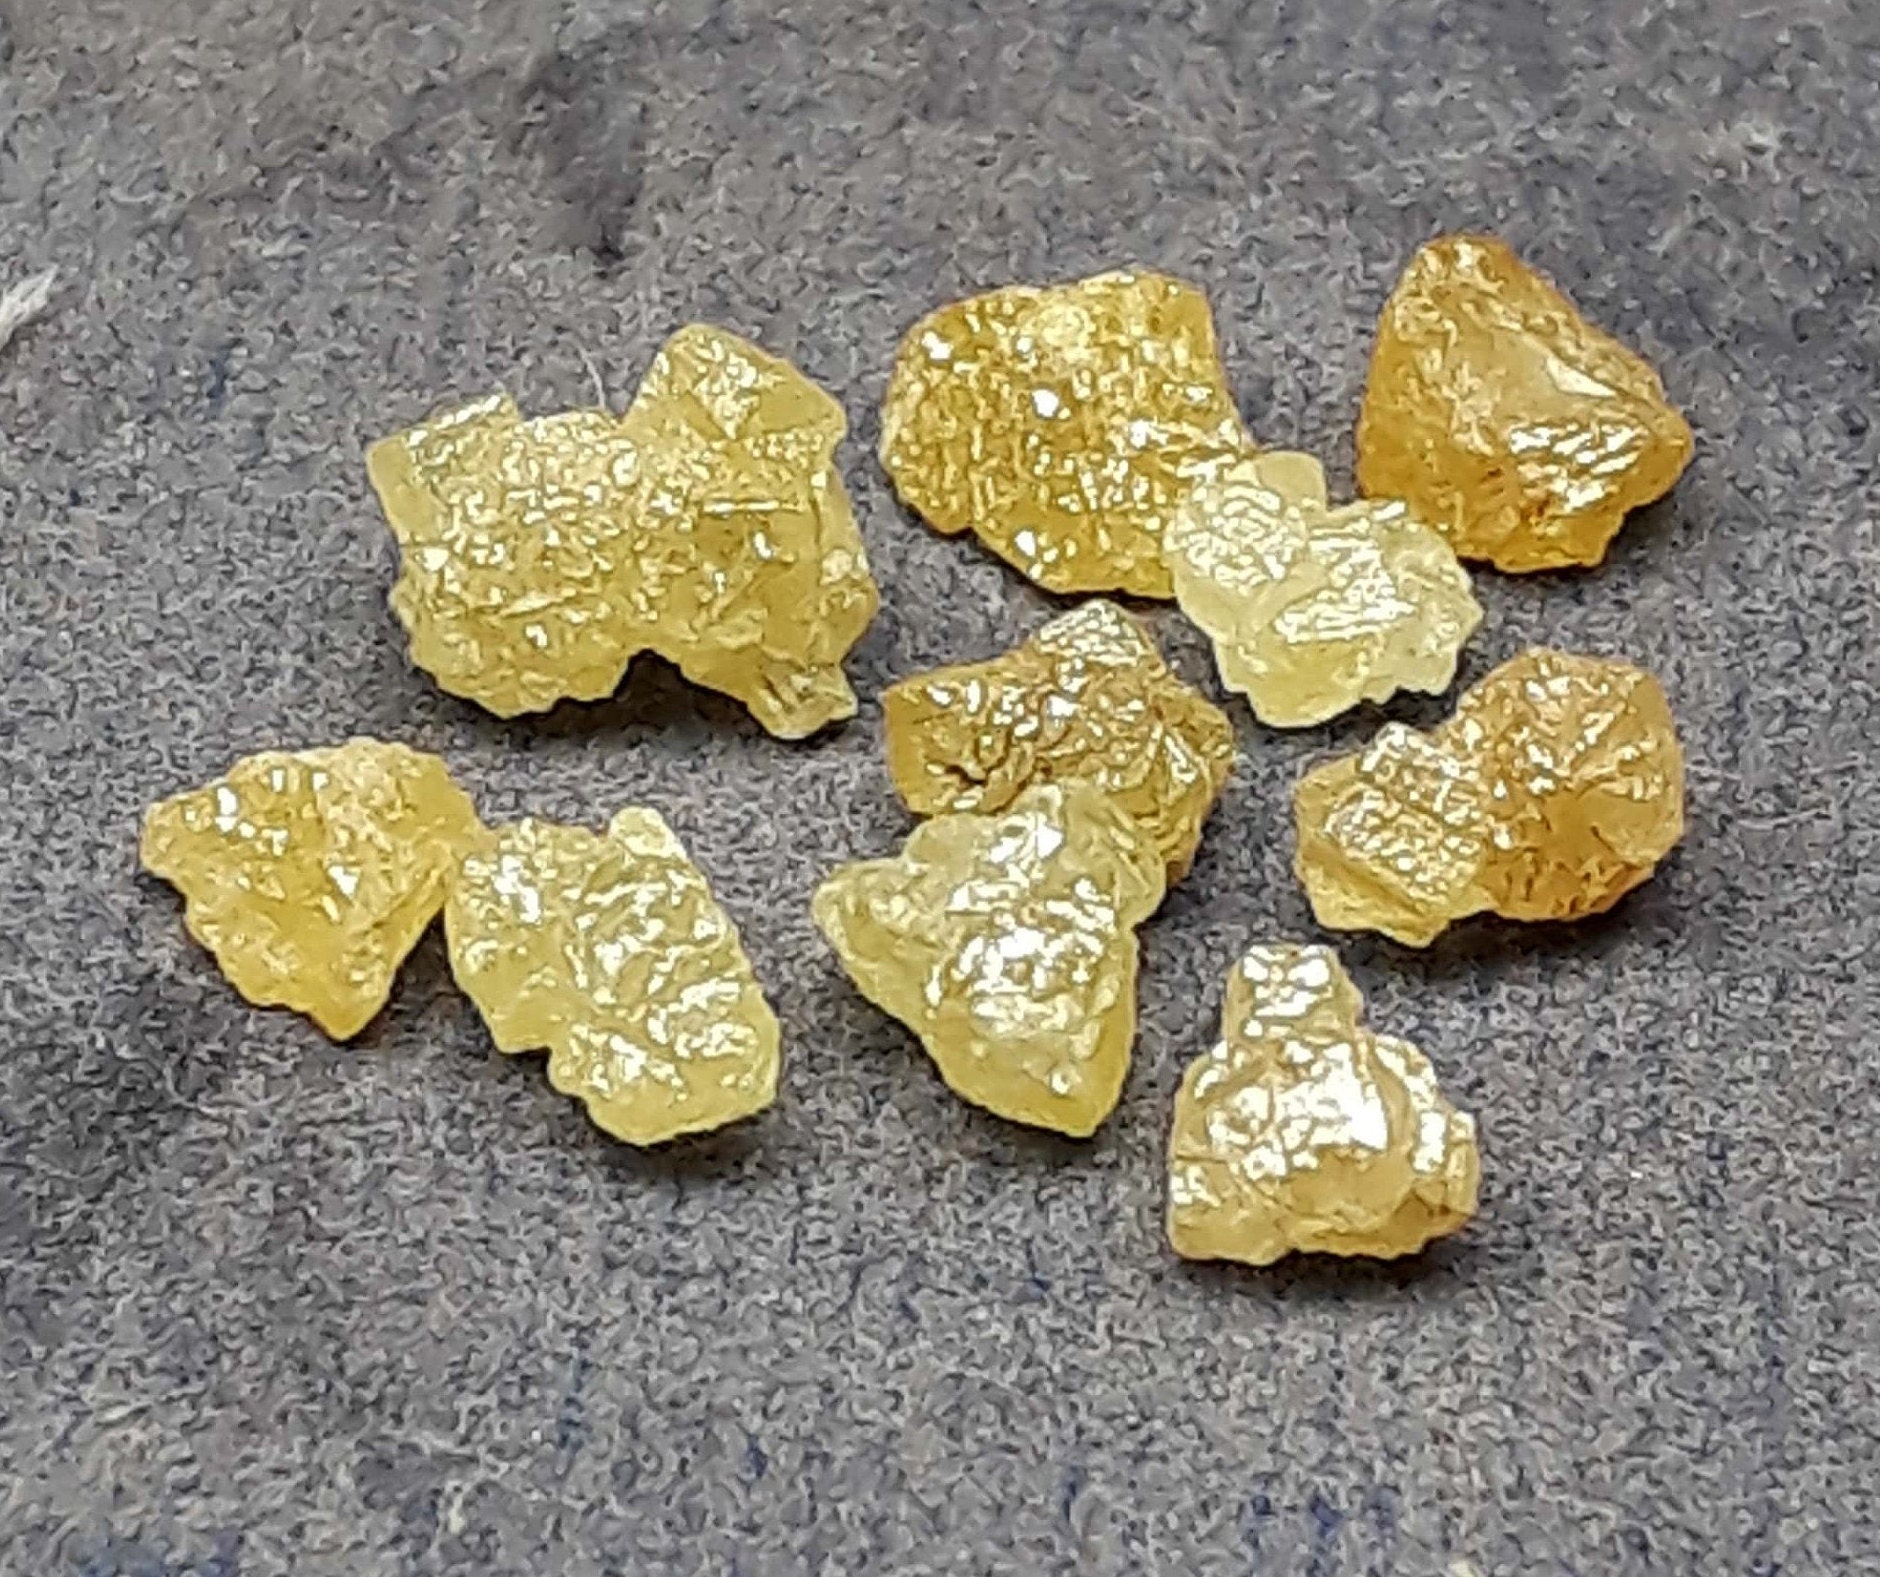 Very big rough yellow diamonds 